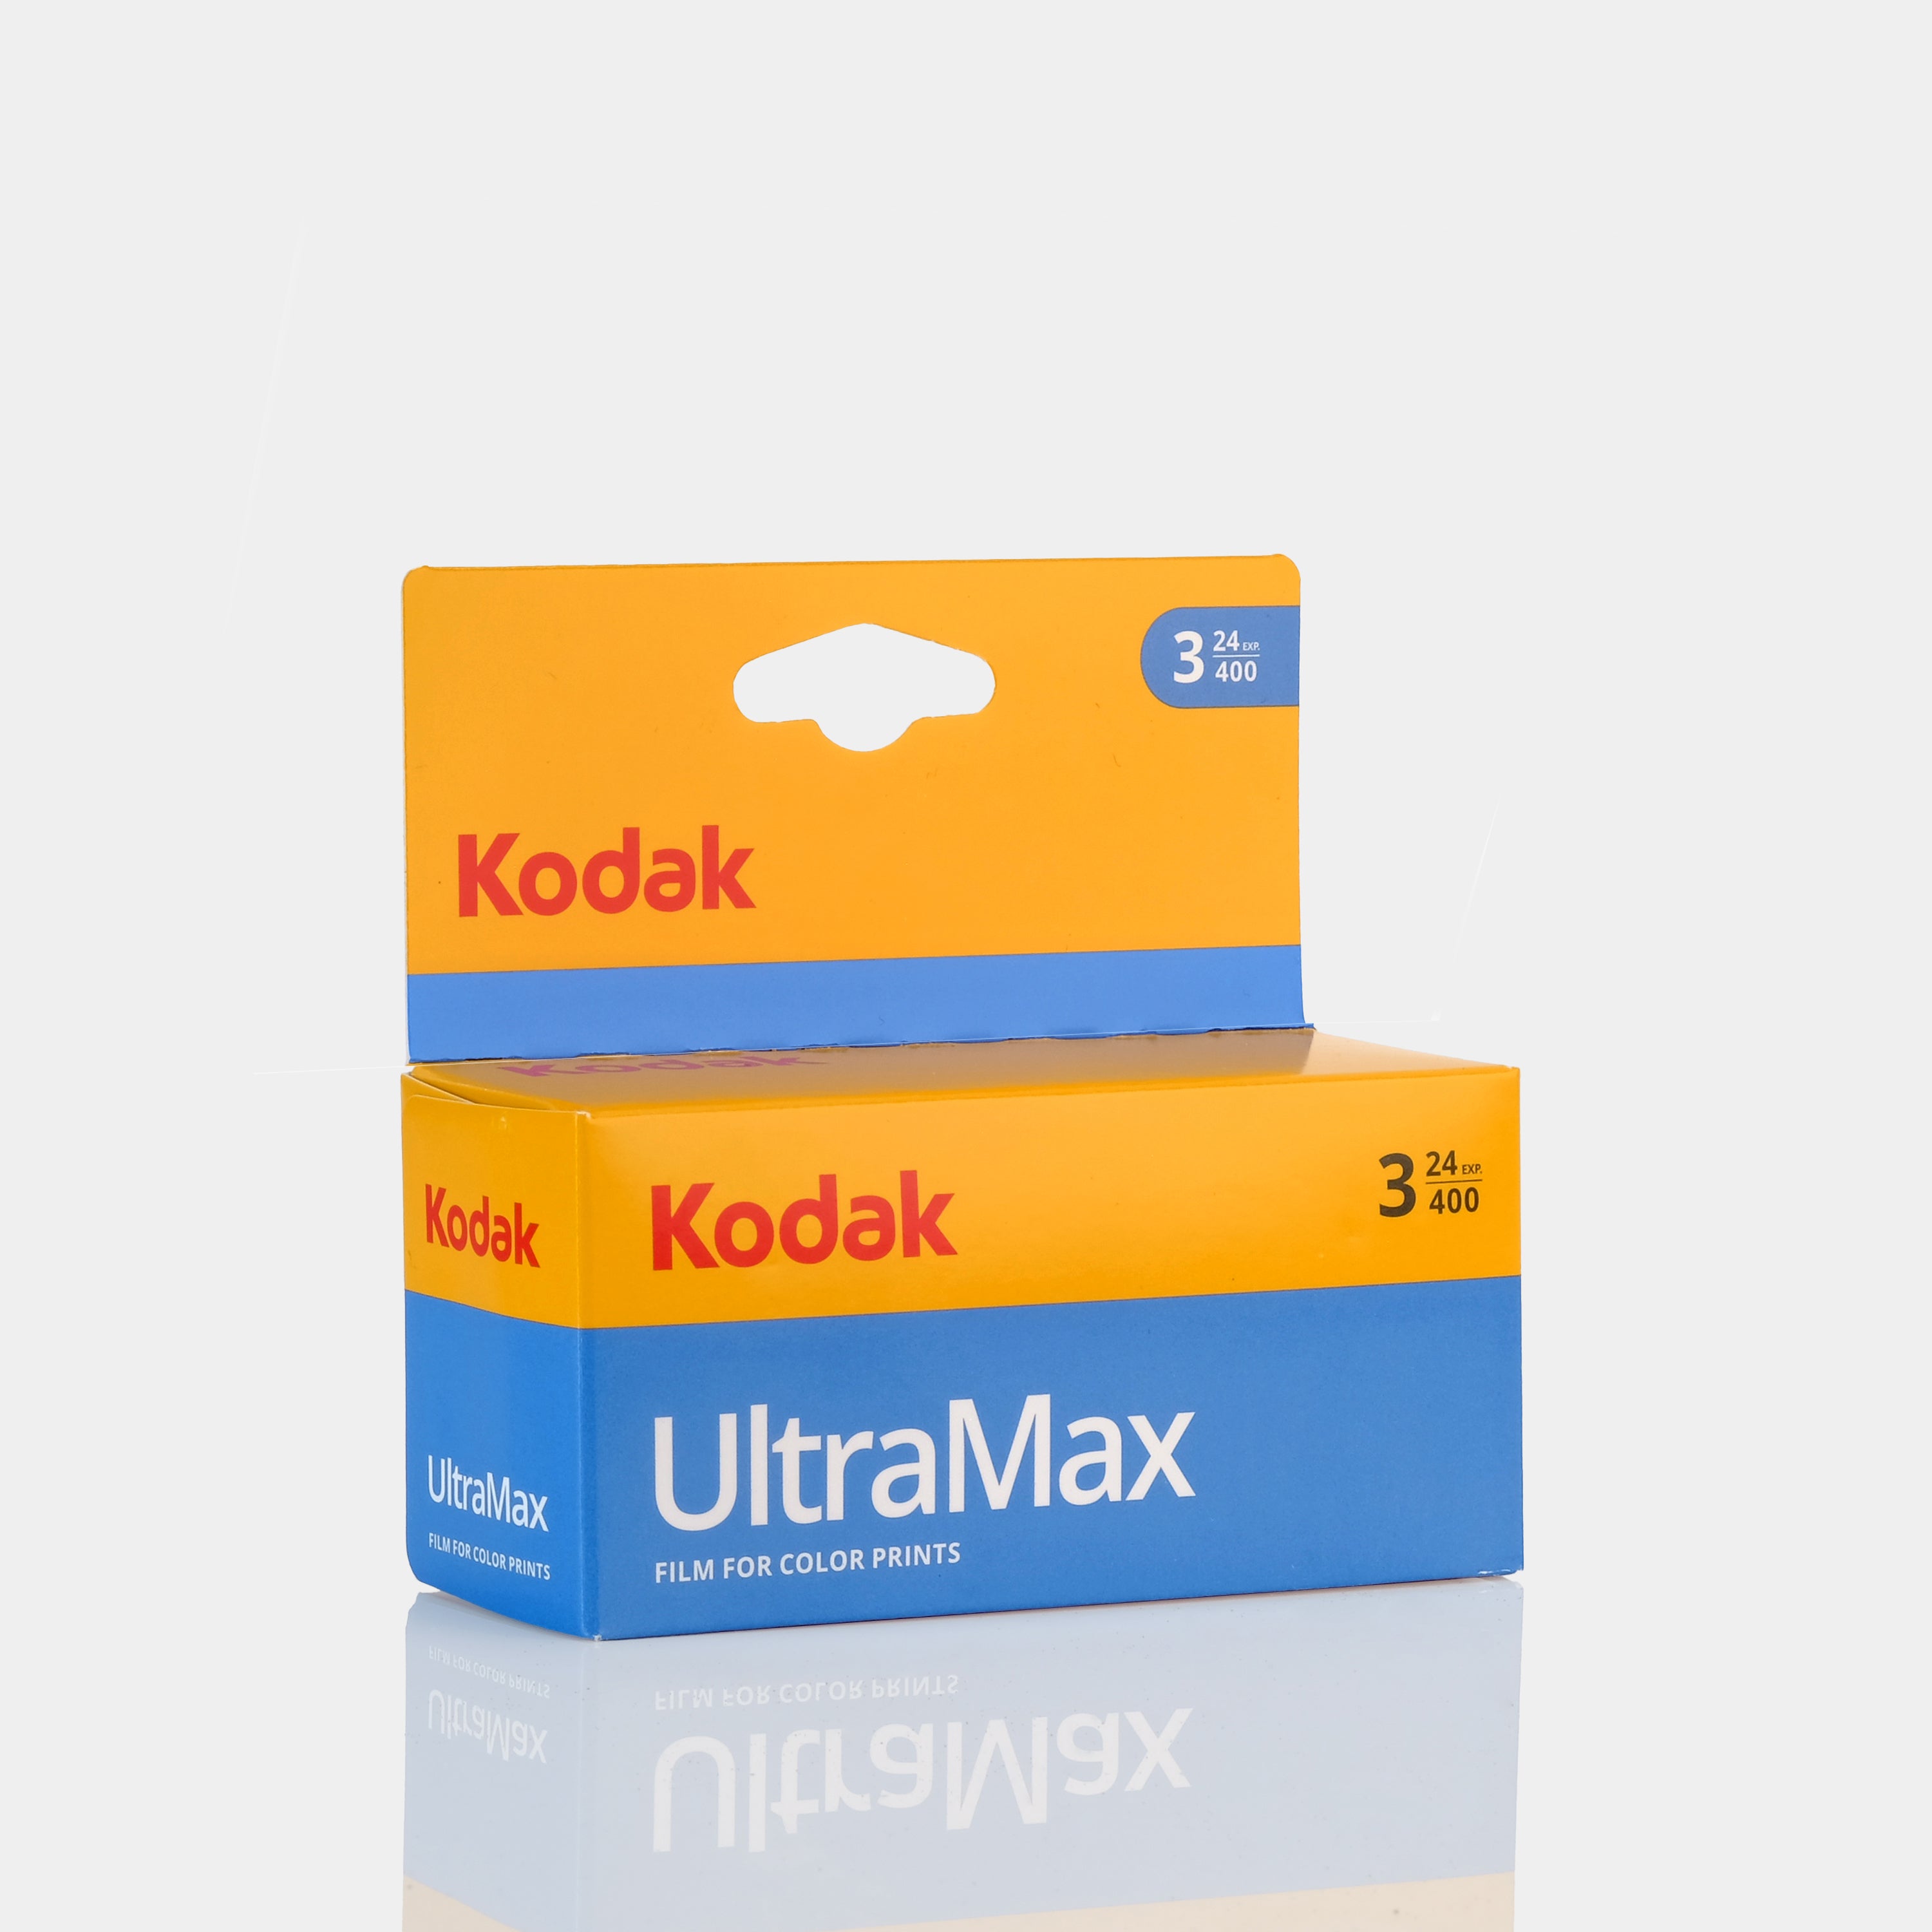 Kodak M38 Reusable 35mm Point and Shoot Blue Compact Film Camera With 3-Pack Kodak UltraMax Film